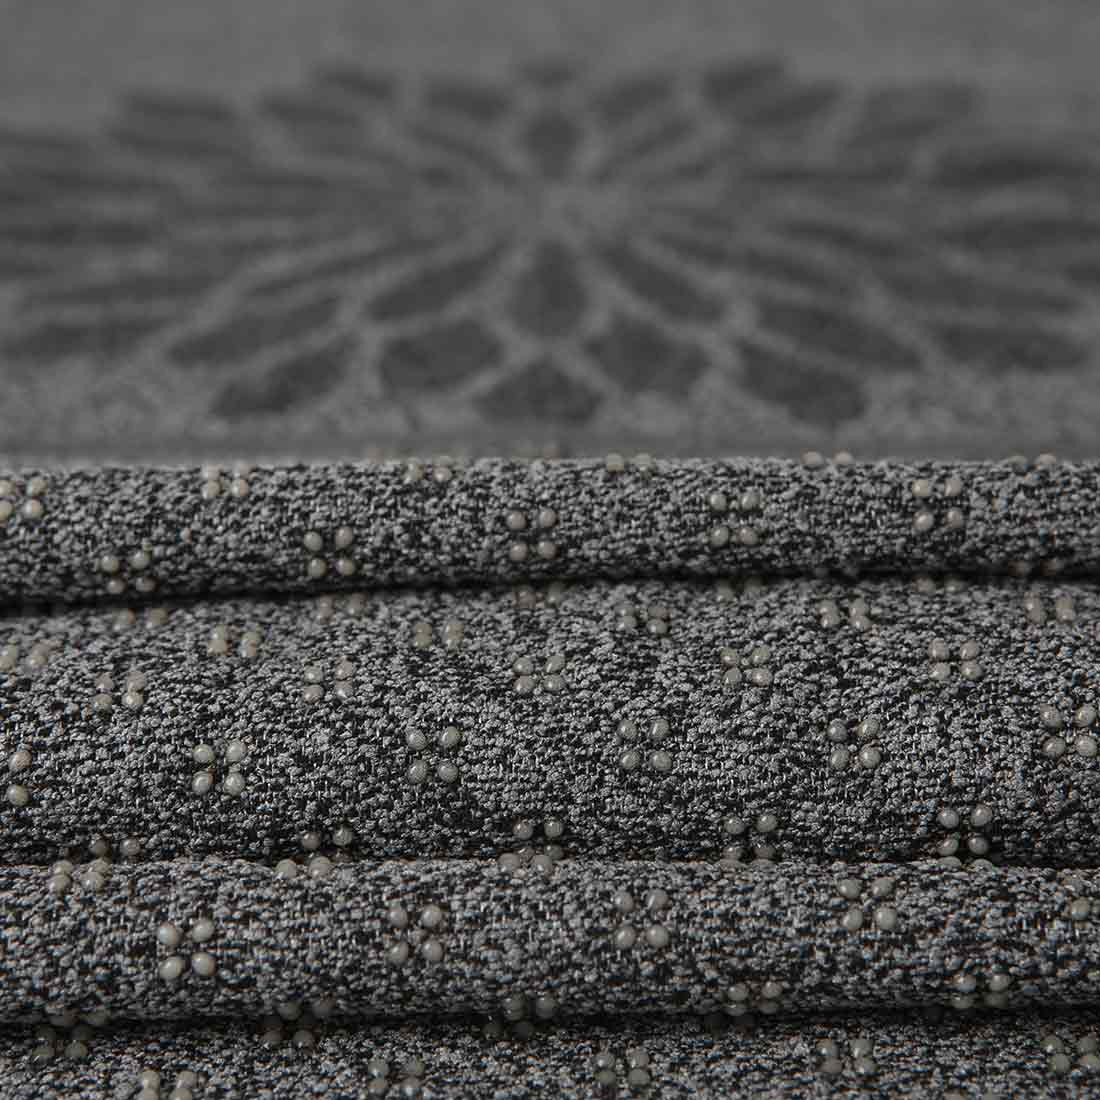 easyoga Titanium Yoga Mat Towel Plus 008 - A9 Dark M-Gray